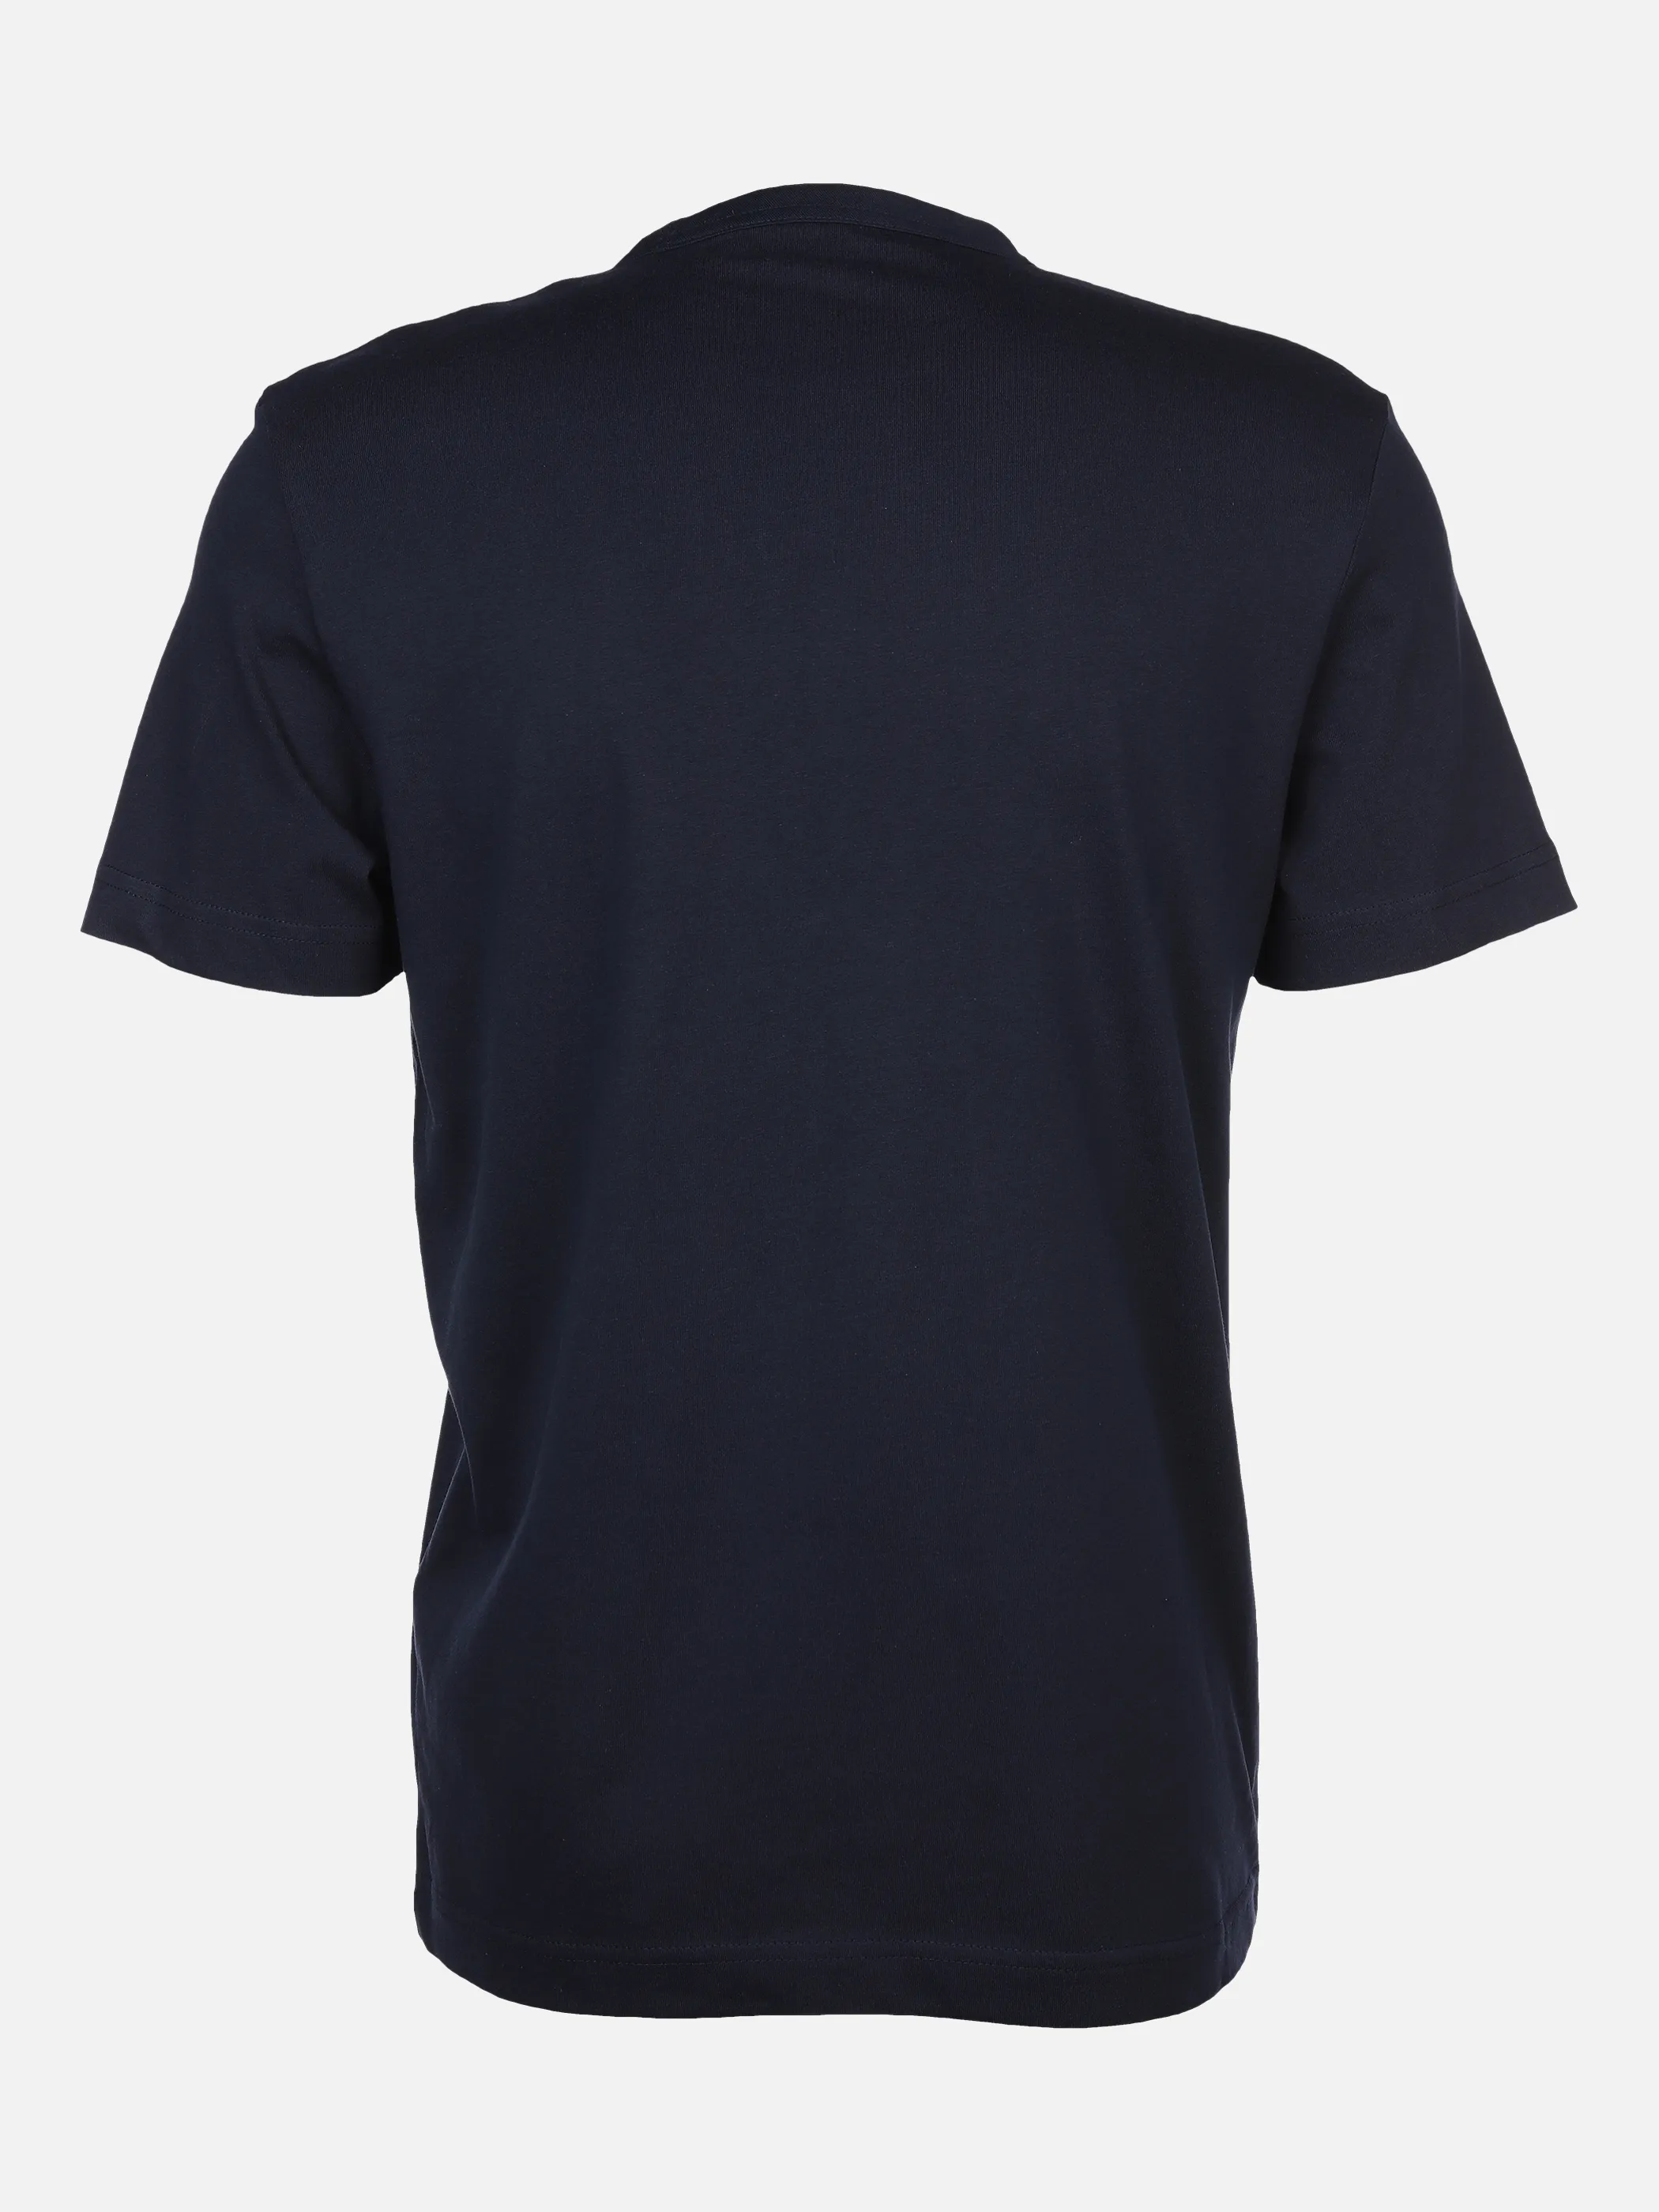 Tom Tailor 1036328 printed t-shirt Blau 880546 10668 2